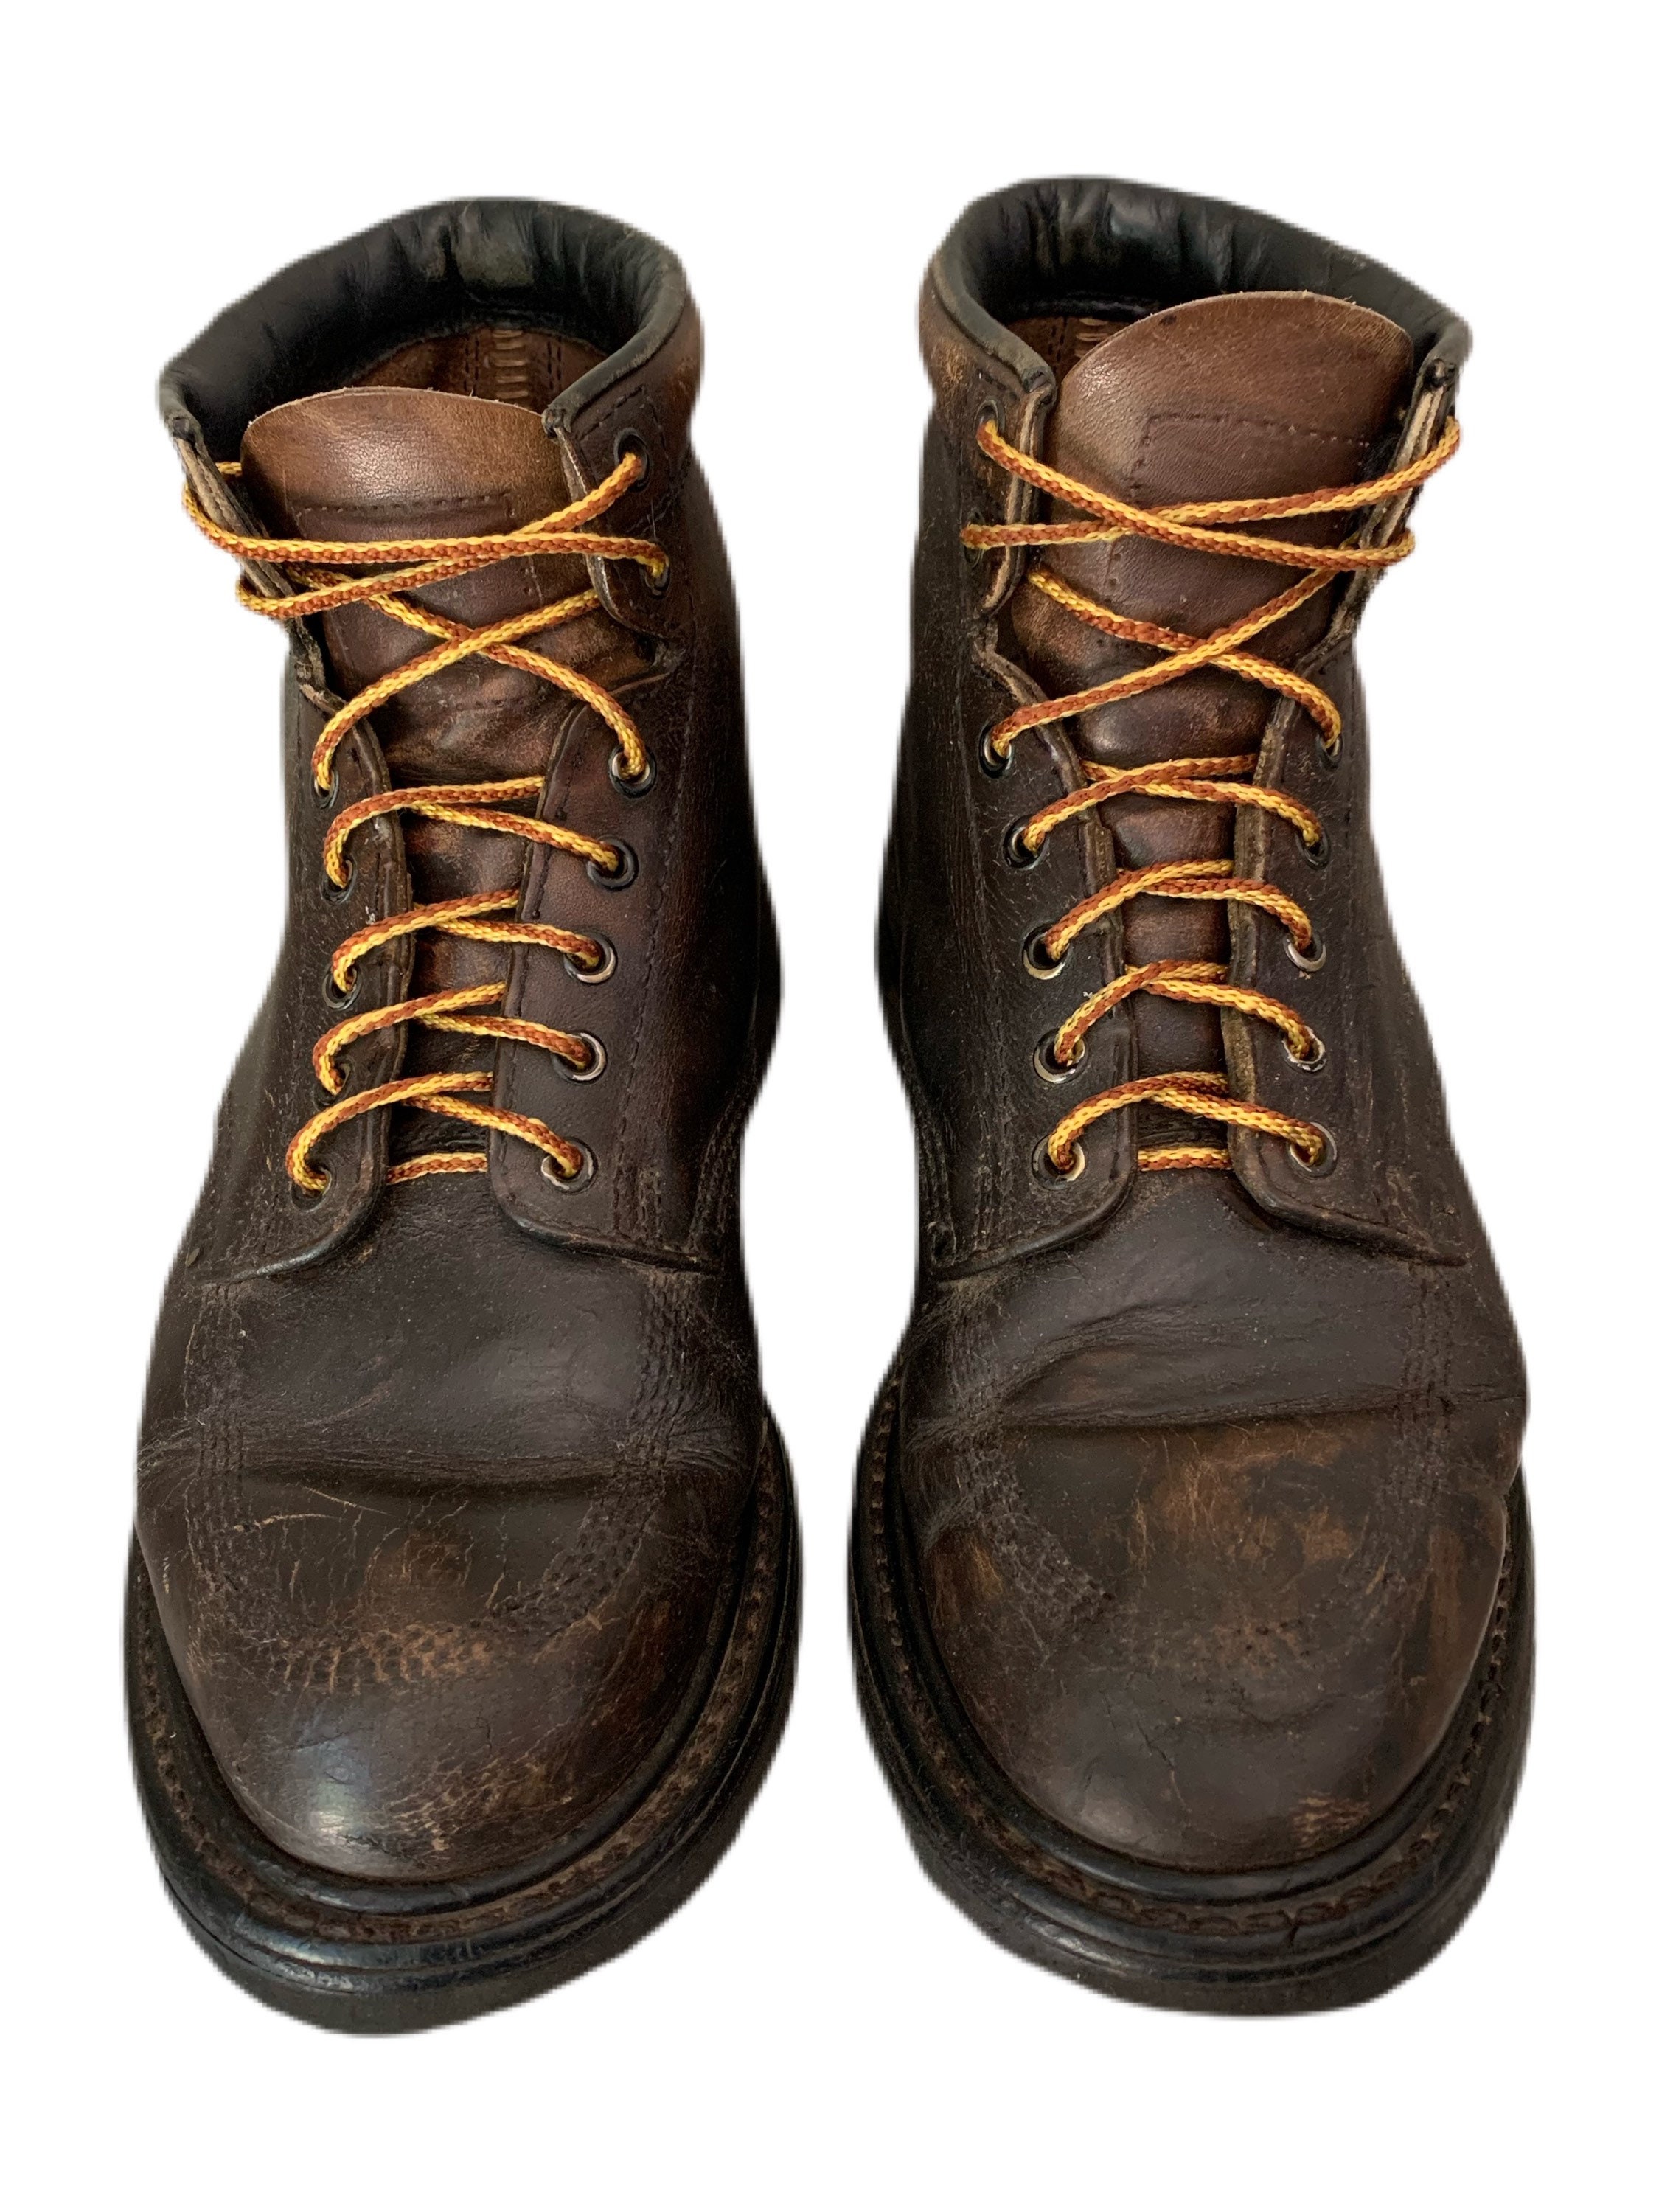 Carolina Commander Boots Distressed Vintage 70s Chukka Boots | Etsy